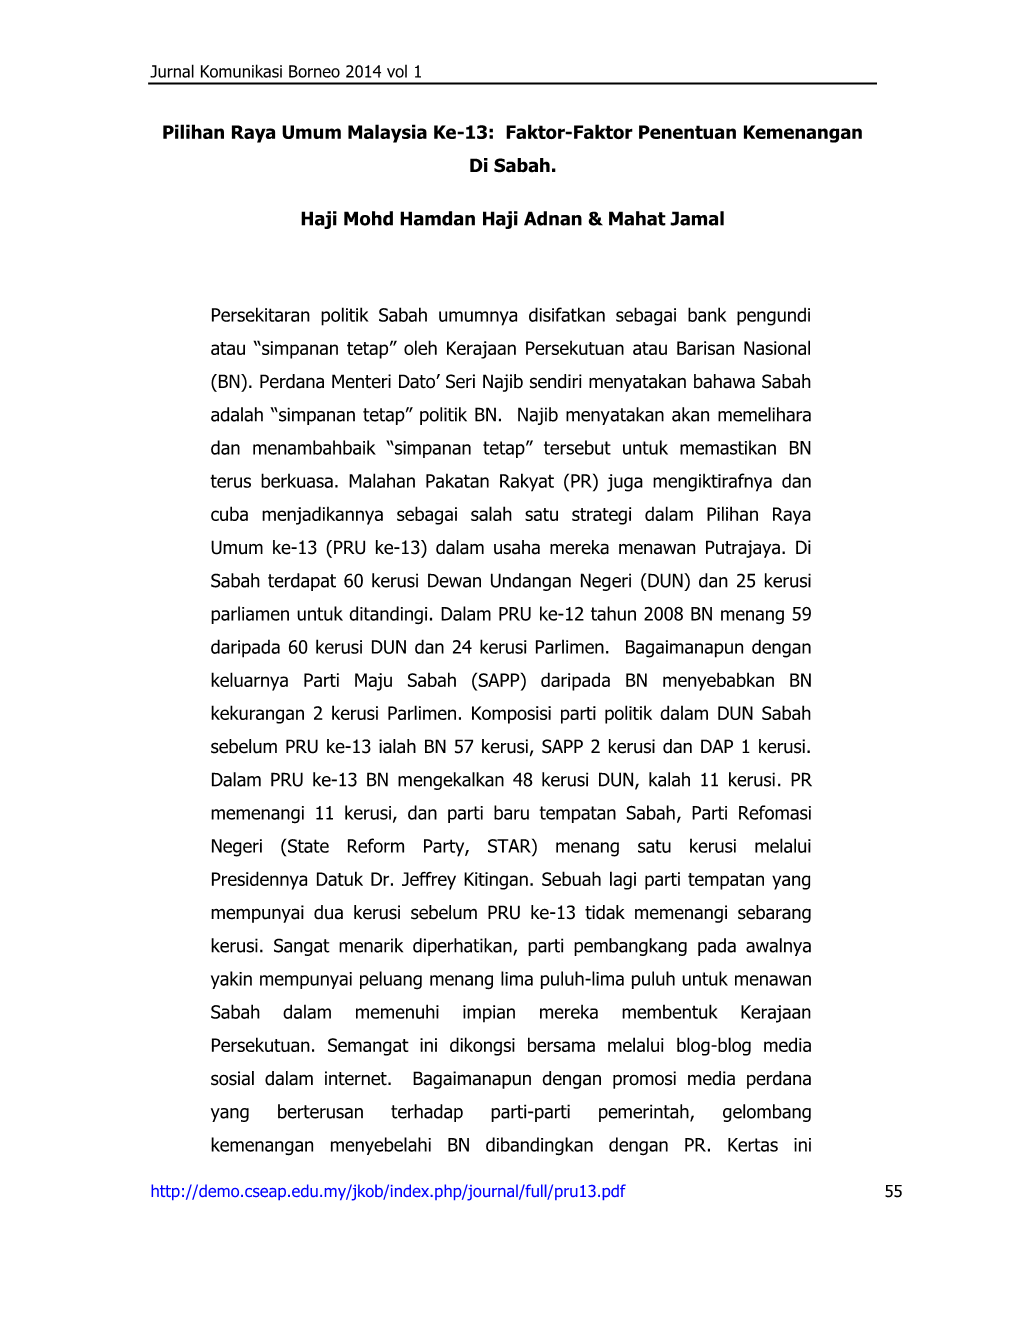 Pdf 55 Jurnal Komunikasi Borneo 2014 Vol 1